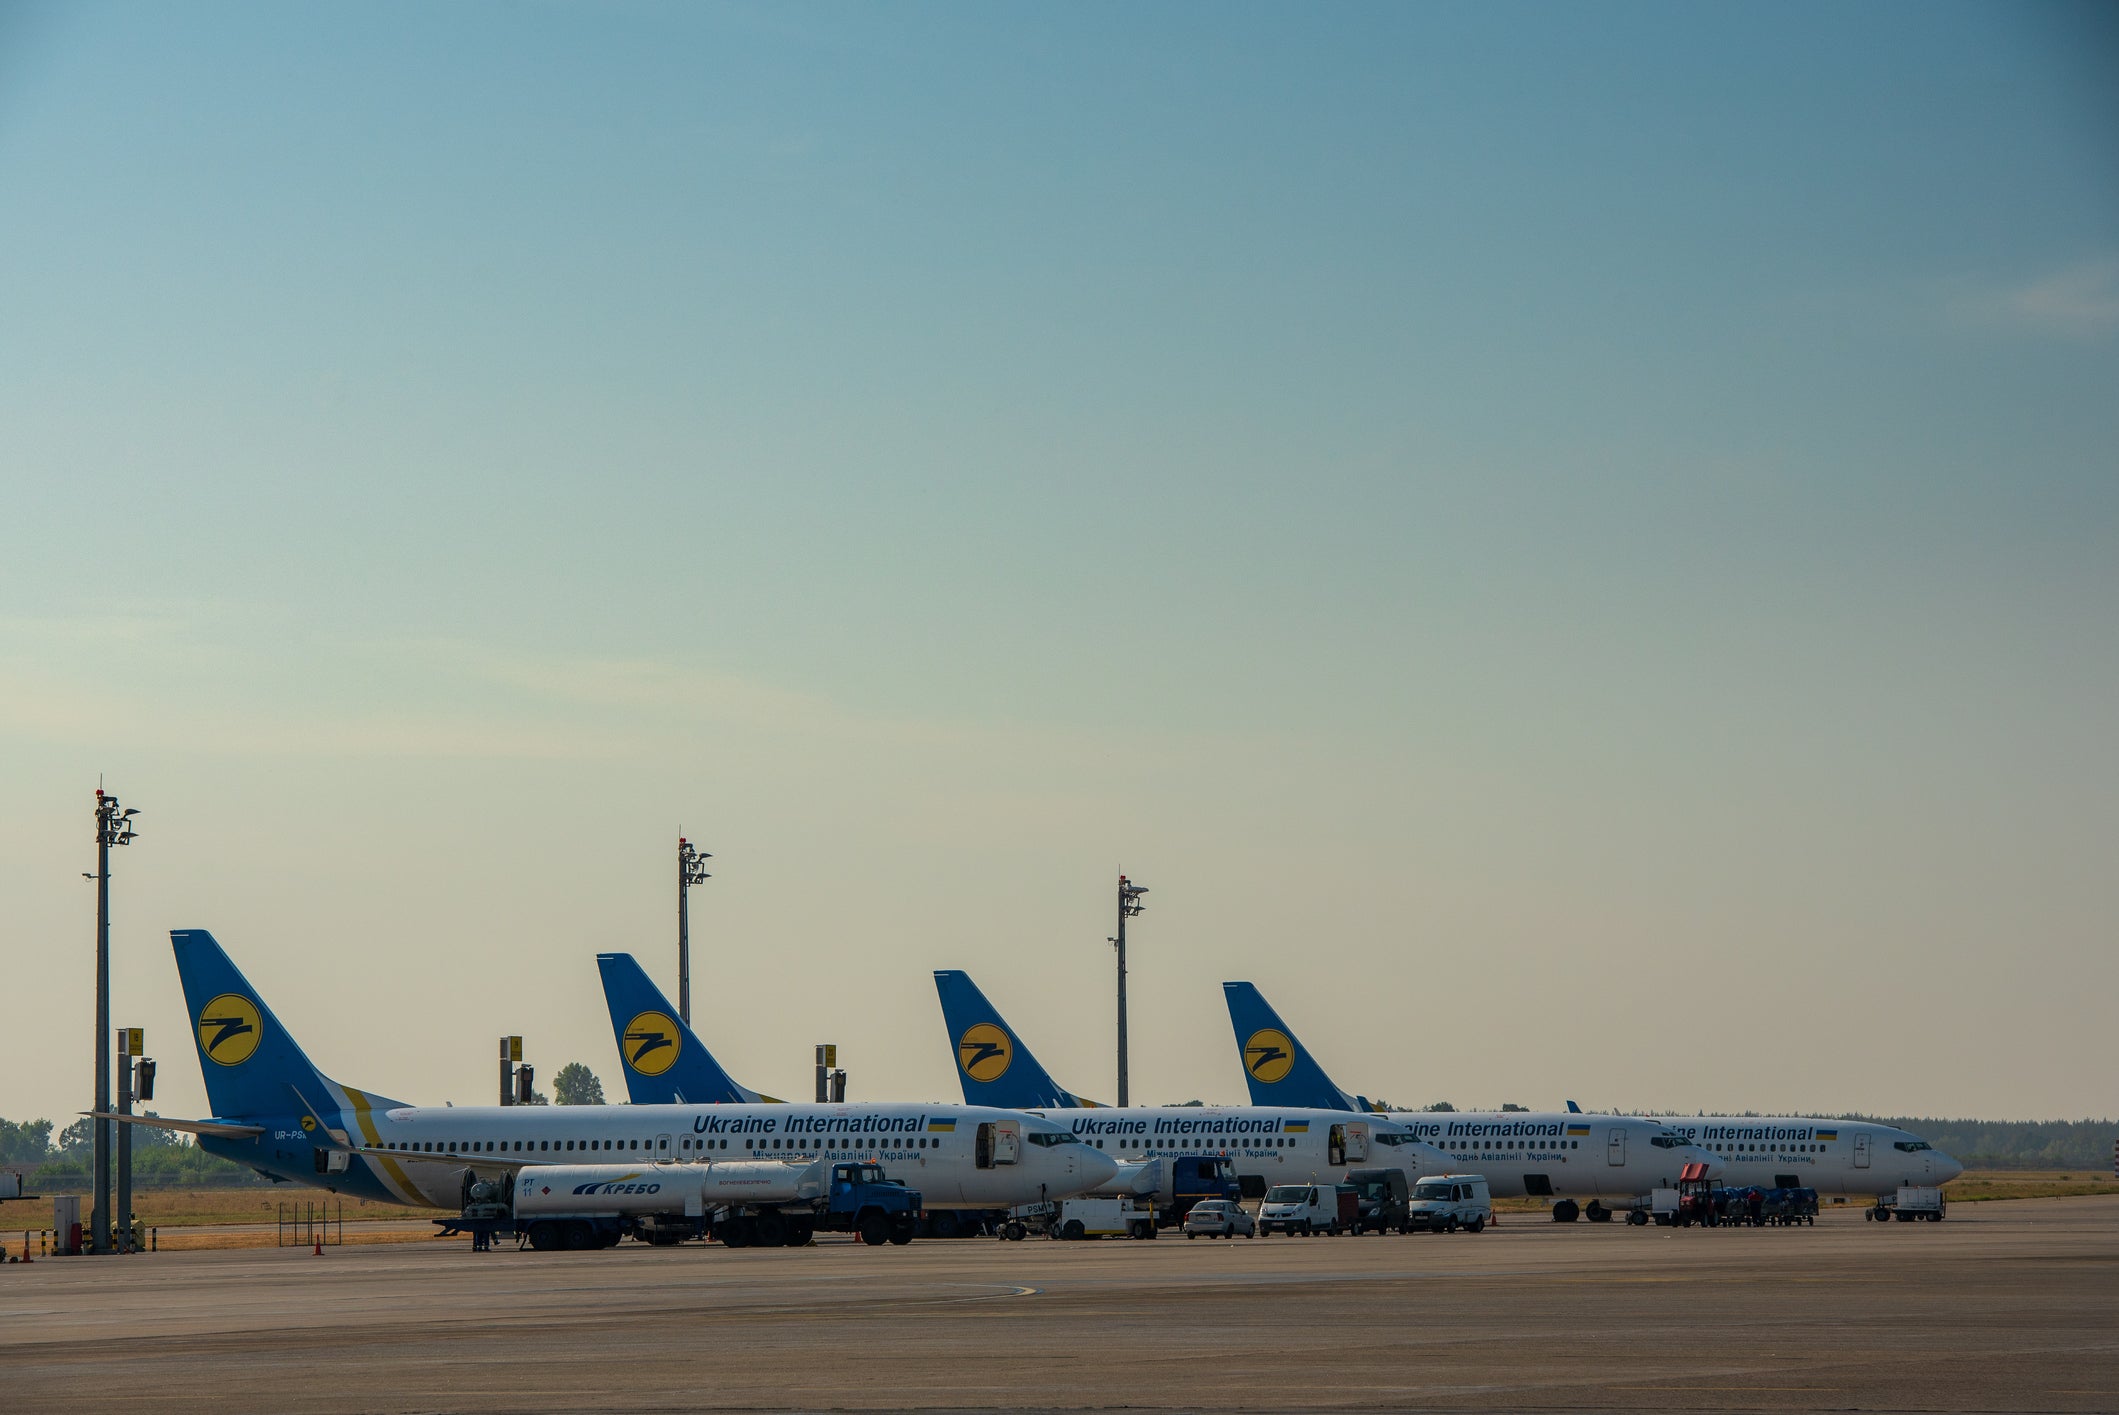 Ukraine International is the flagship airline of Ukraine